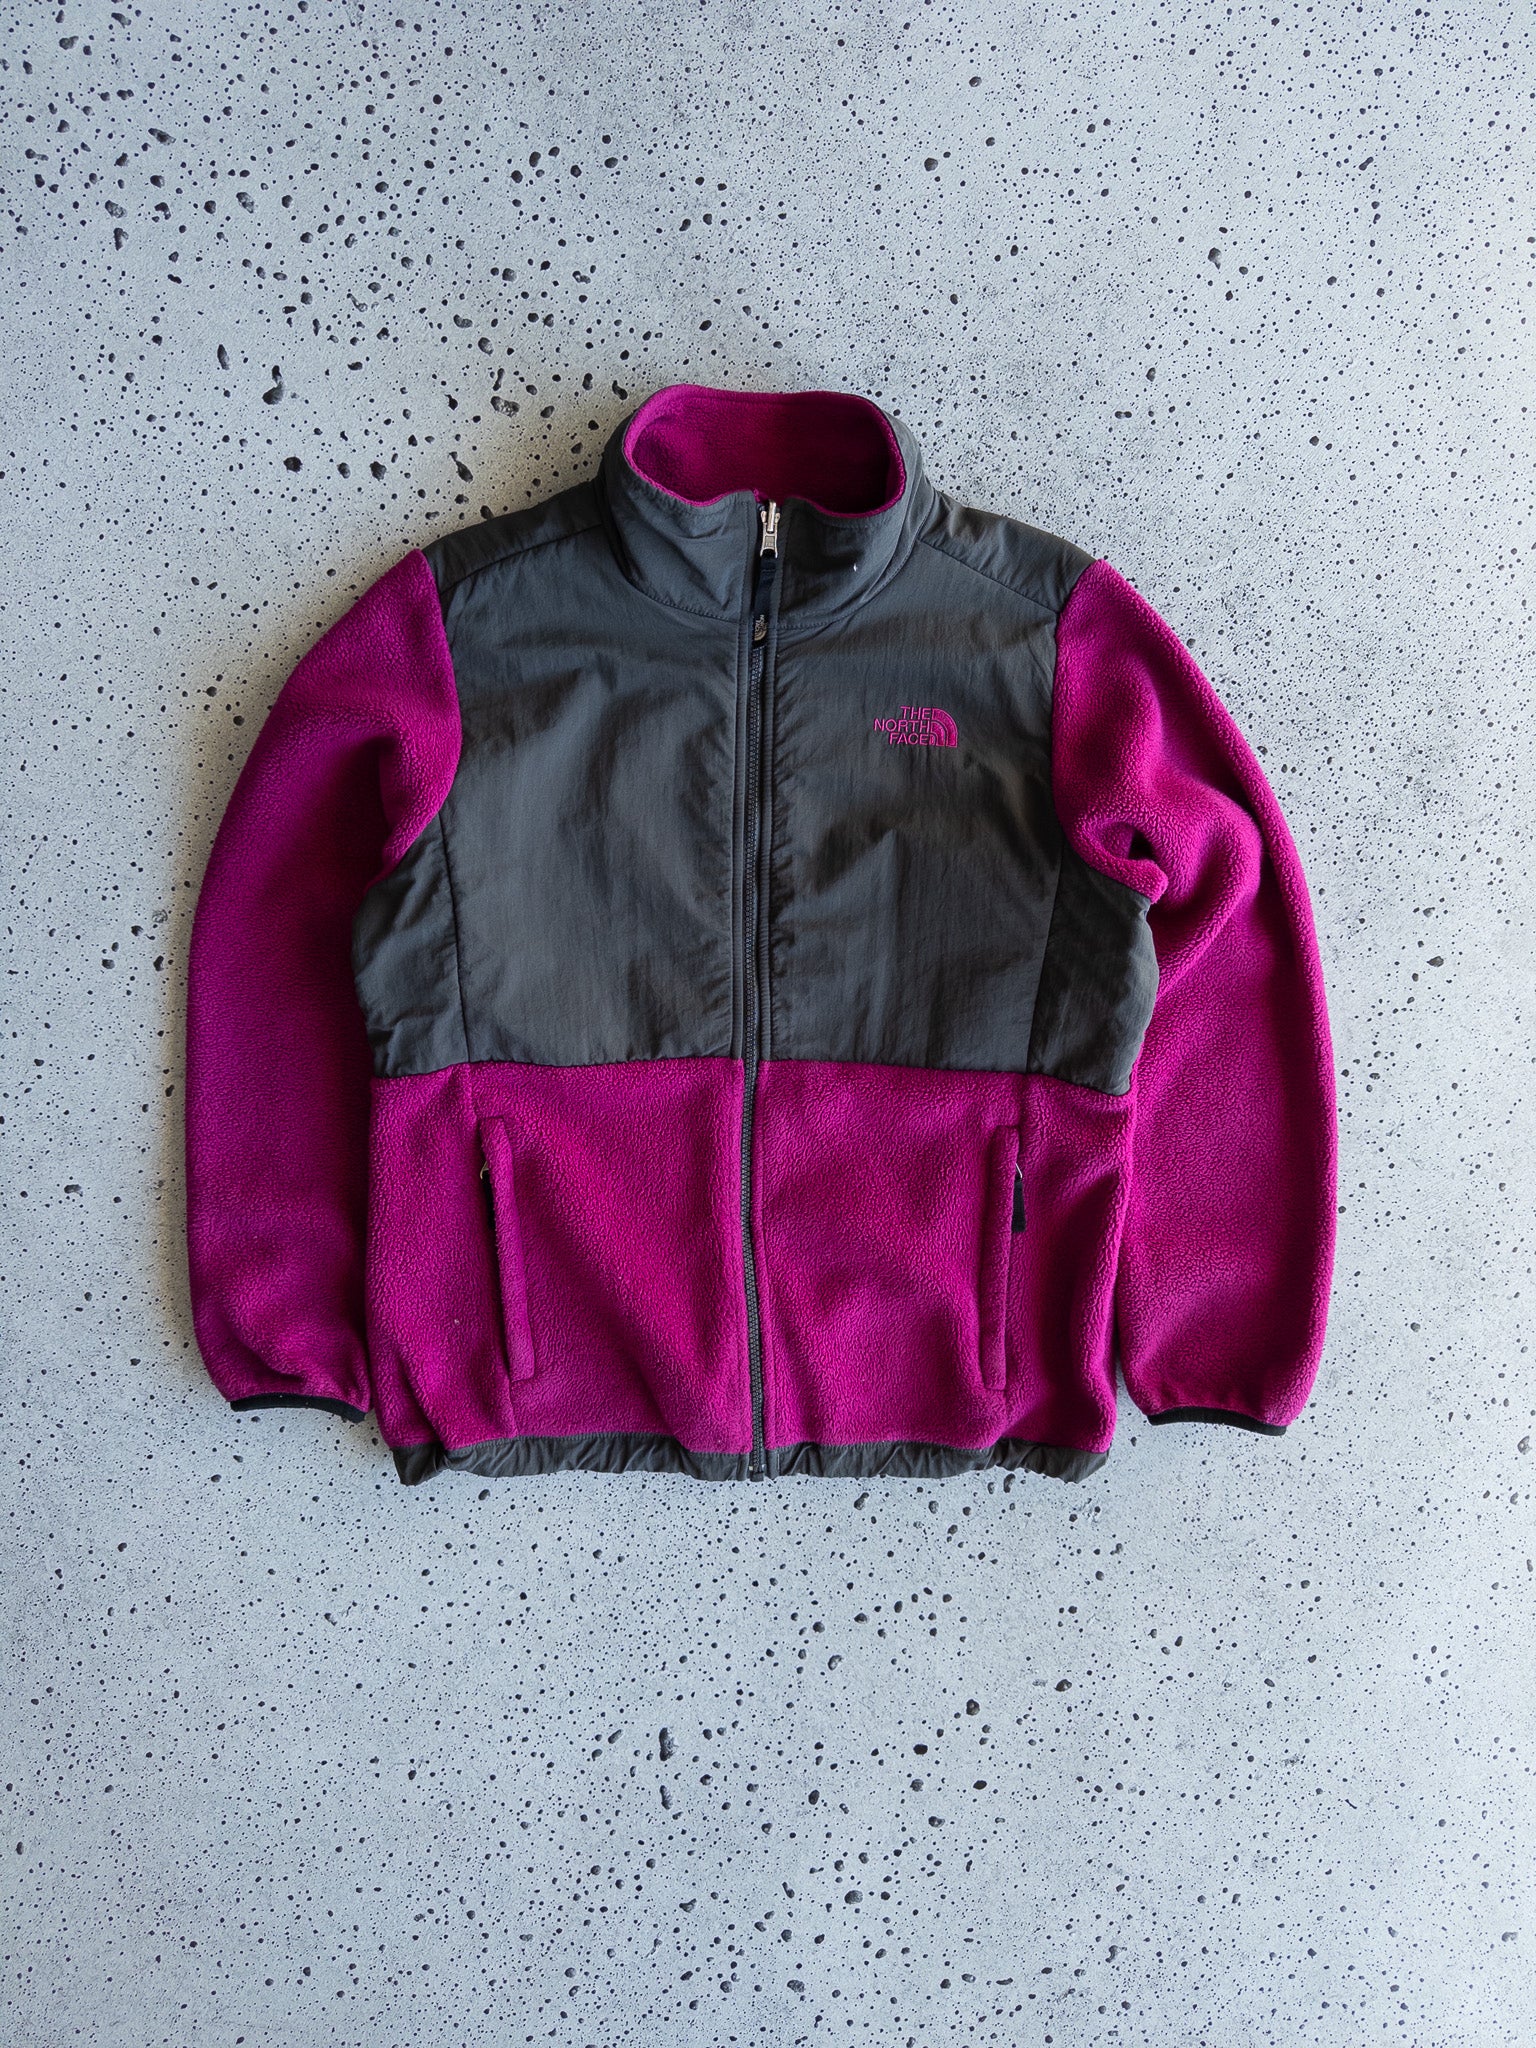 Vintage The North Face Denali Jacket (S)